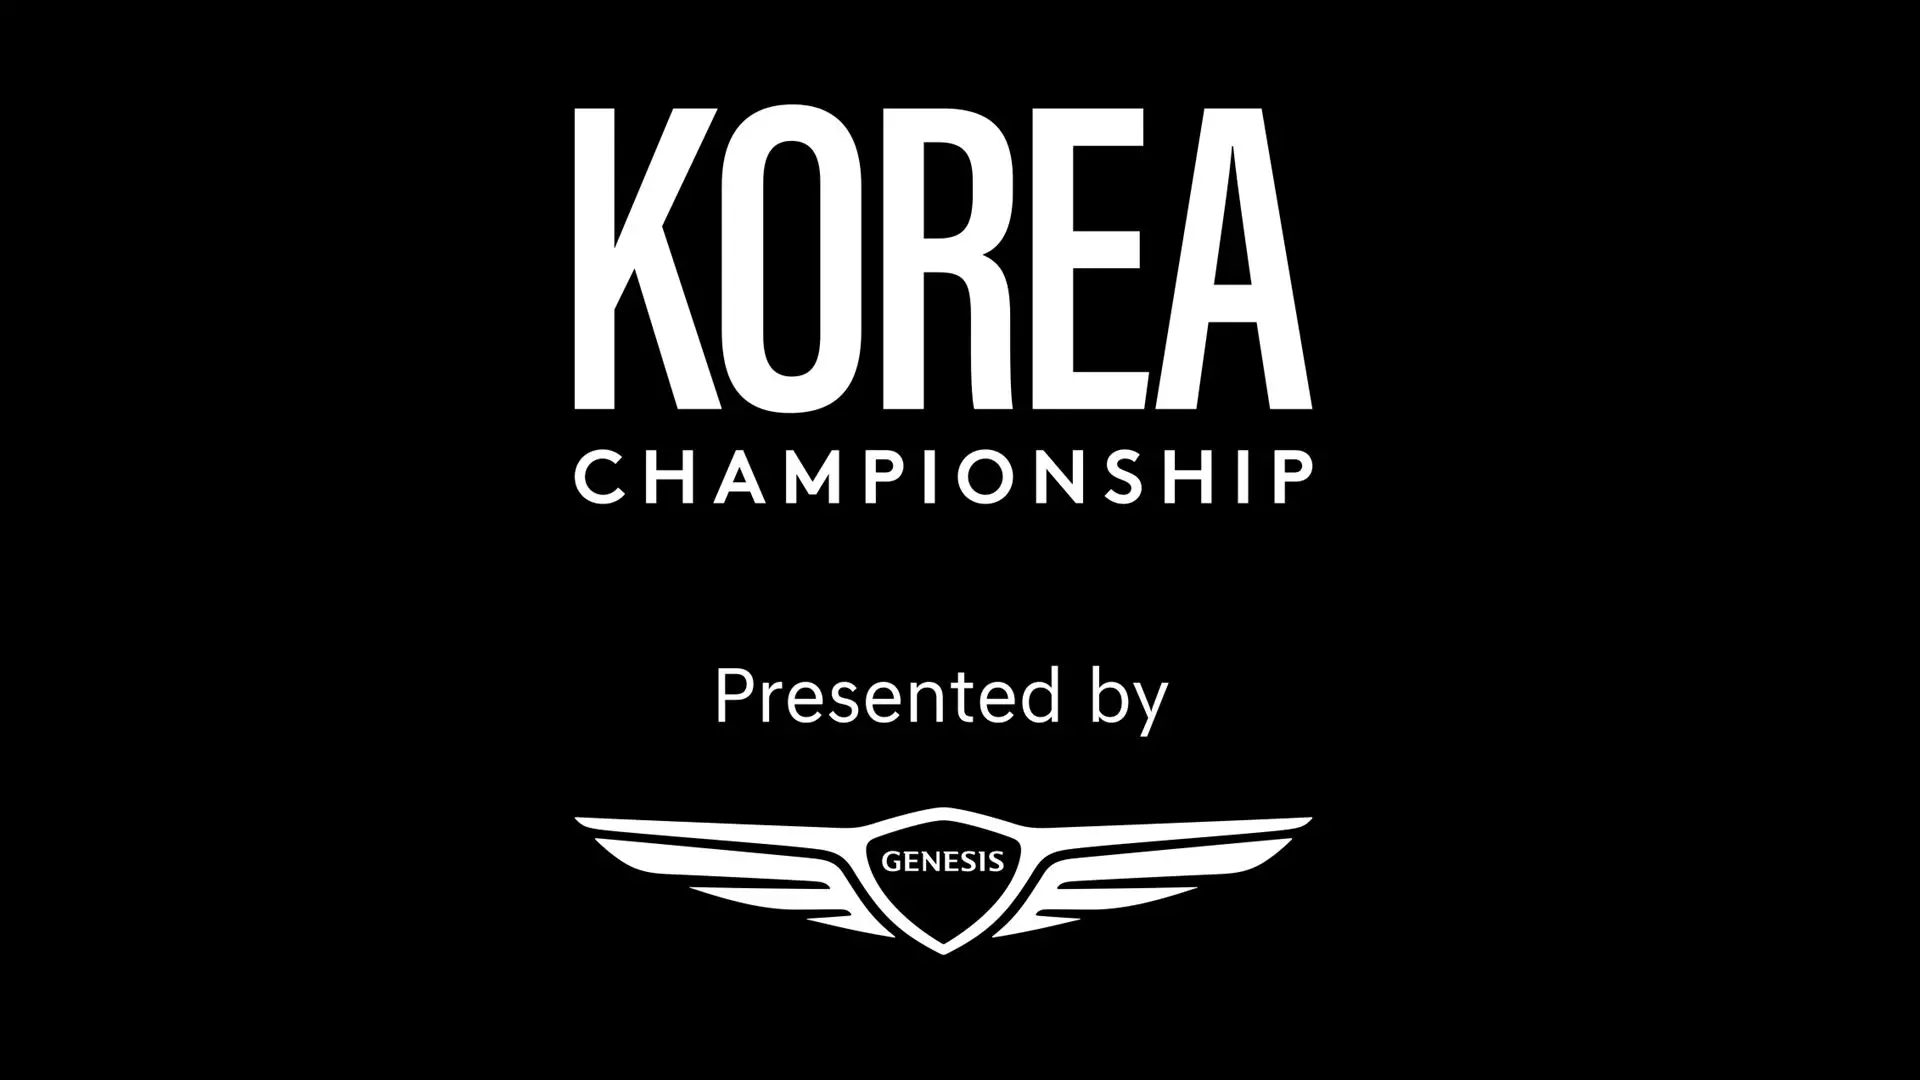 Korea Championship Logo